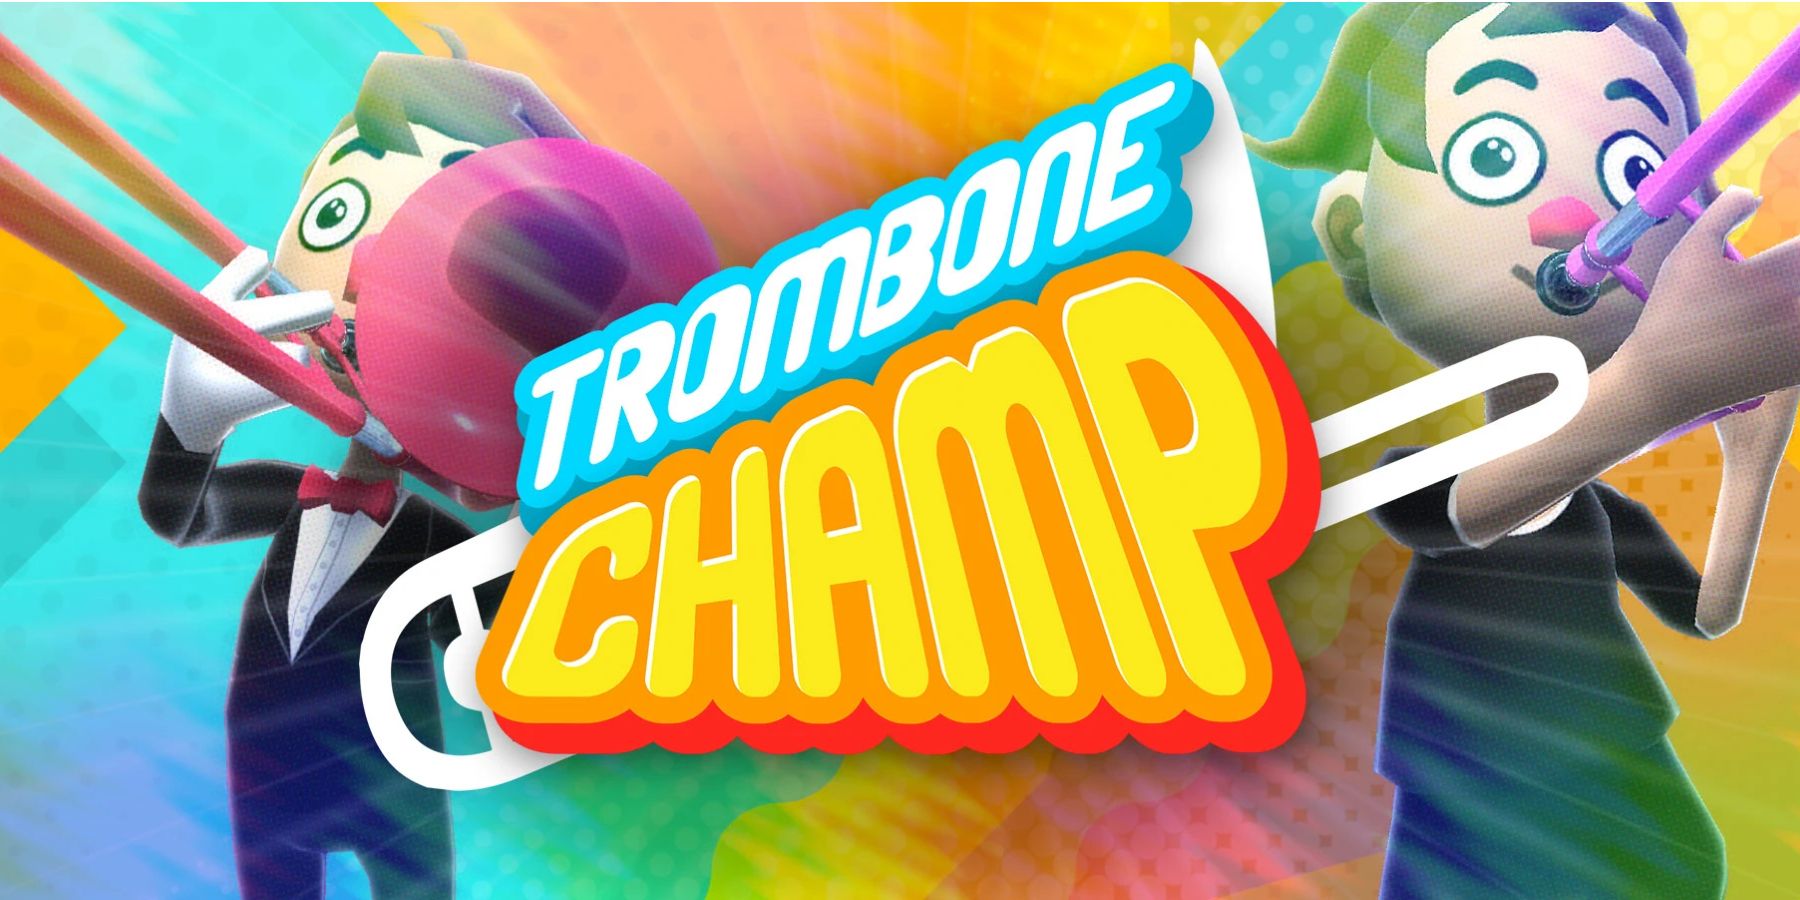 trombone champ